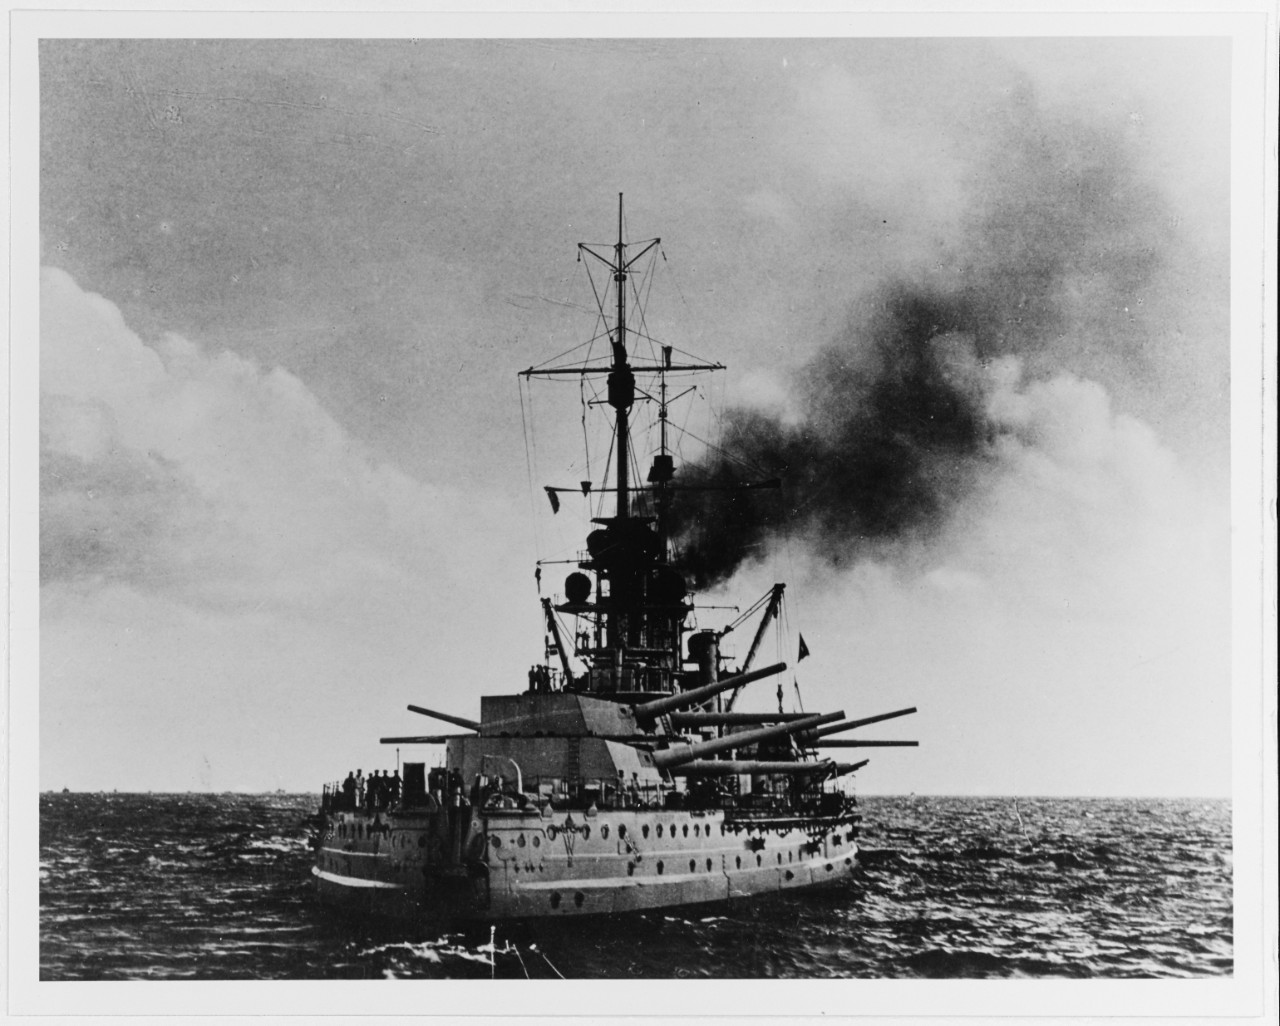 PRINZREGENT LUITPOLD (German battleship, 1912-1919)